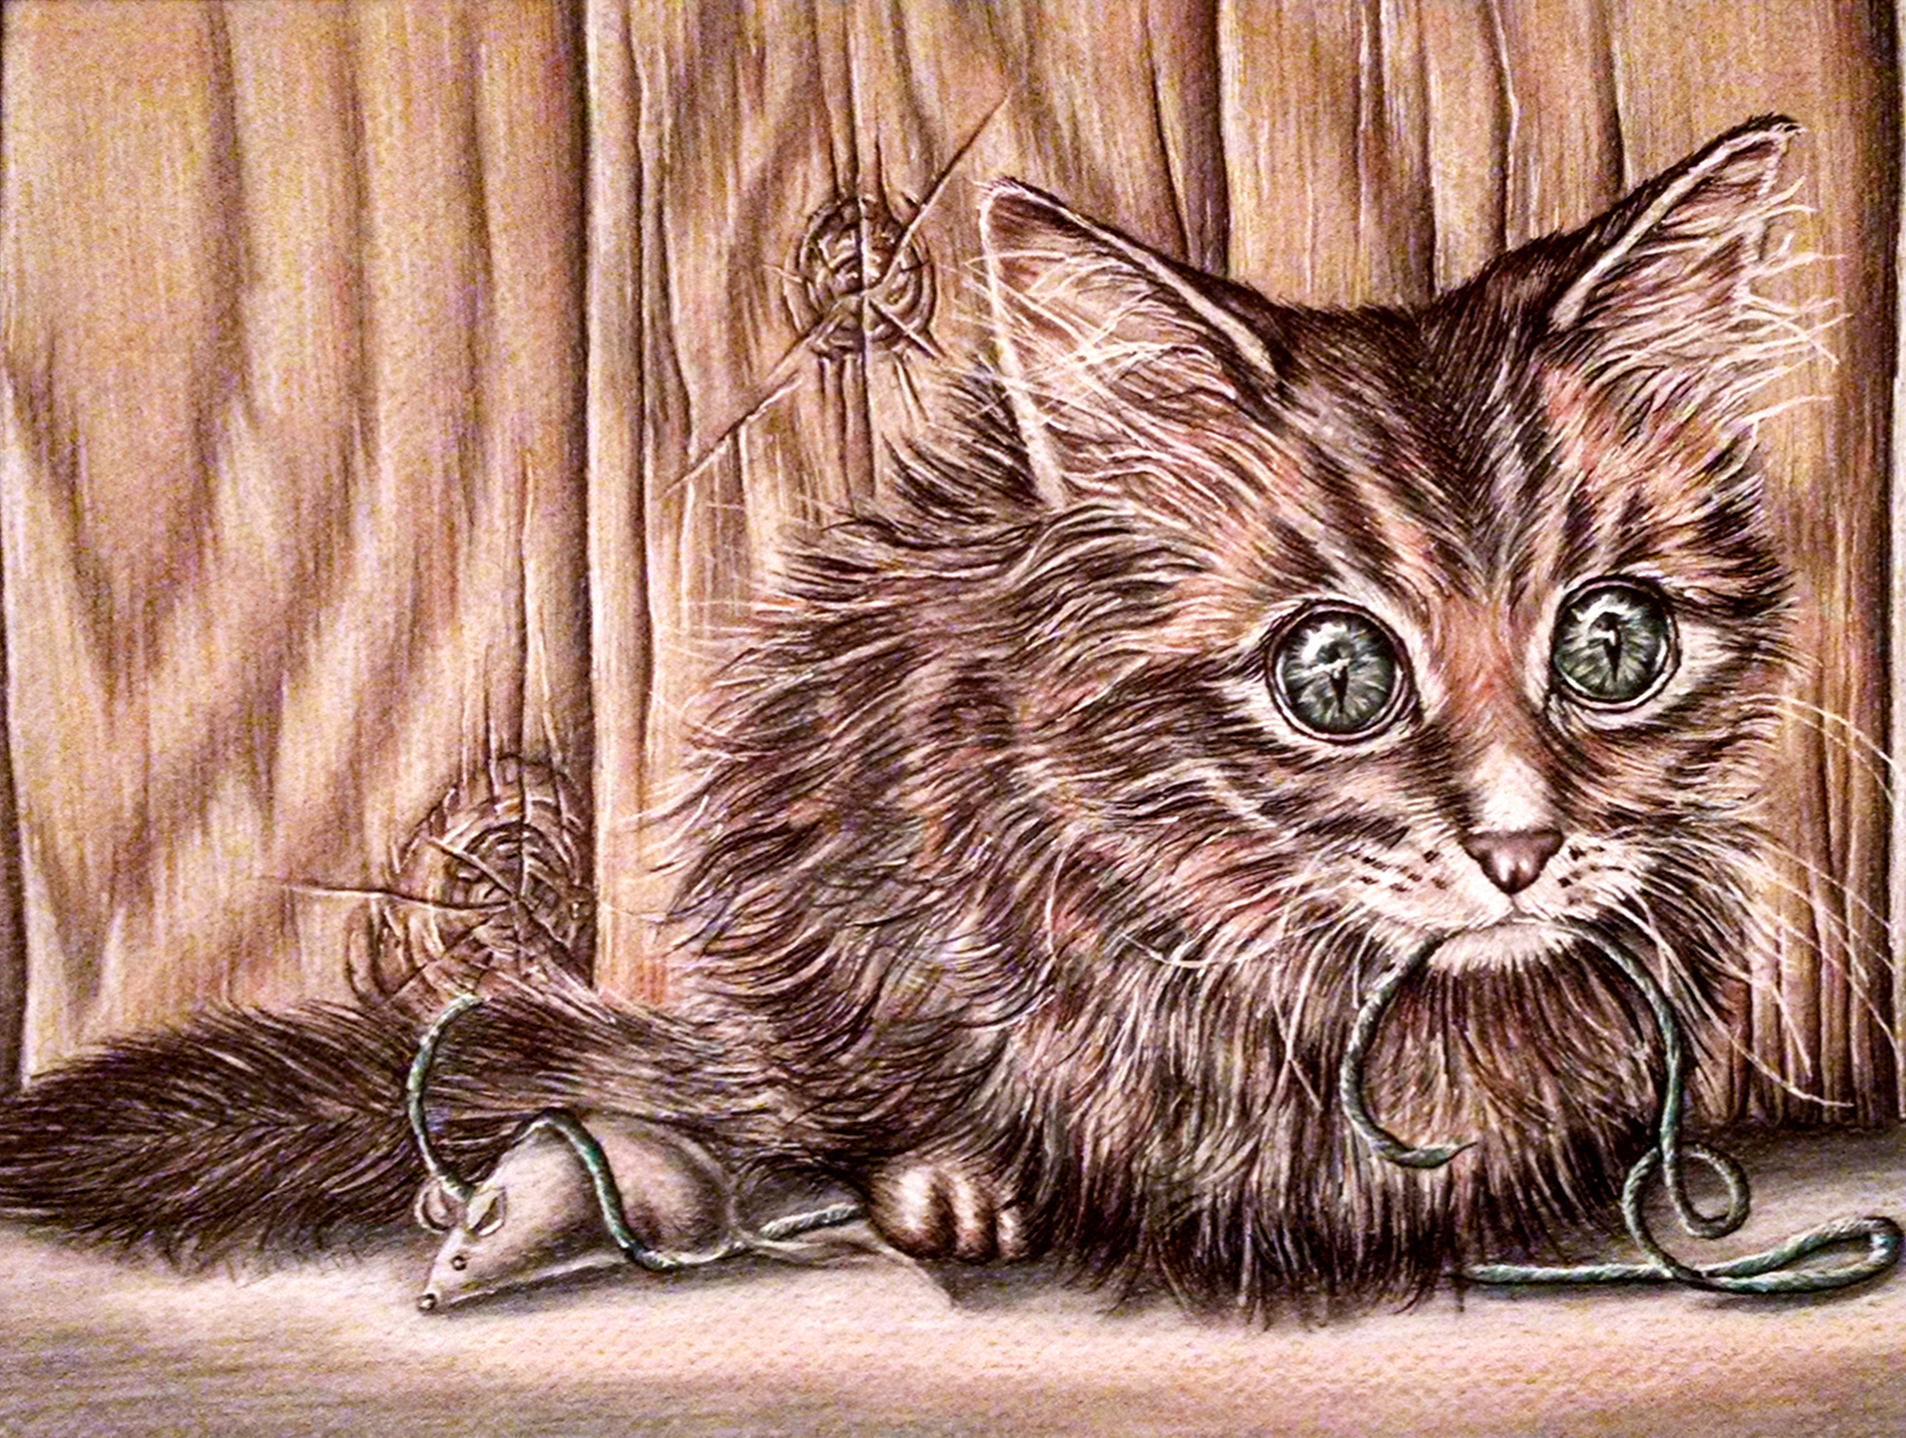 cat art print part of a cute kitten face watercolor pencil drawing pet portrait cat lover/'s gift